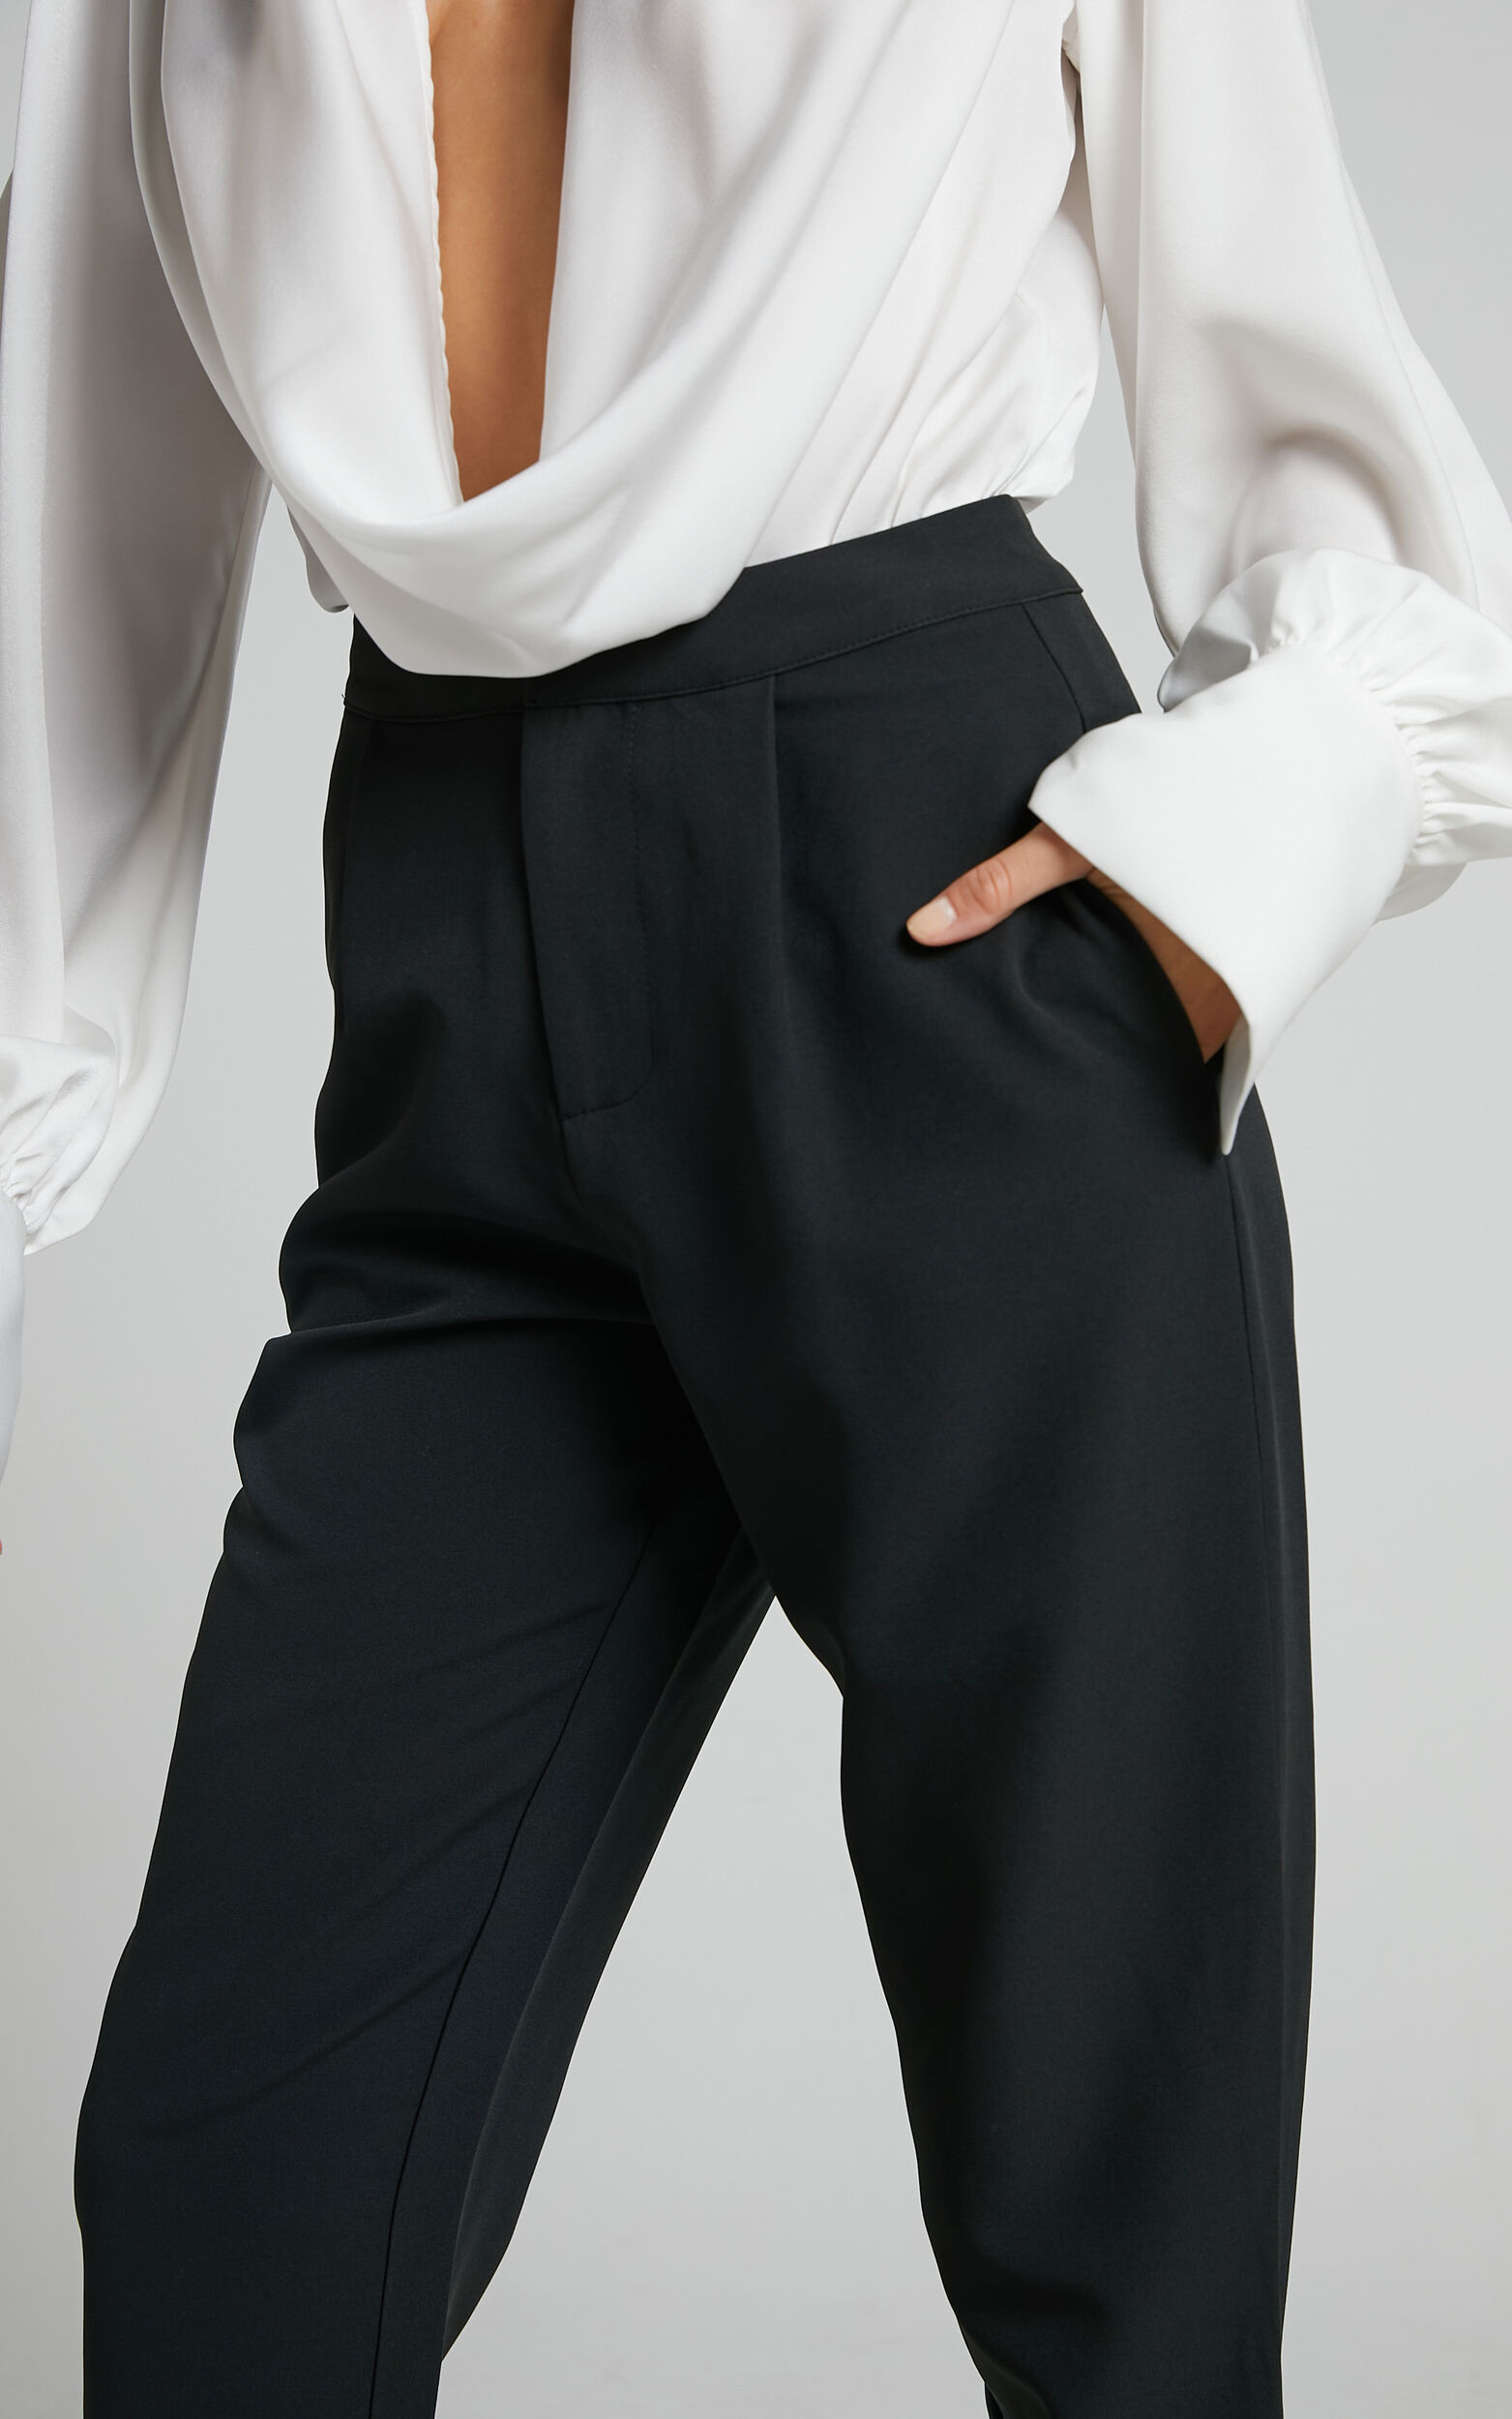 Damika Pants - High Waist Cropped Pin Tuck Pants in Black